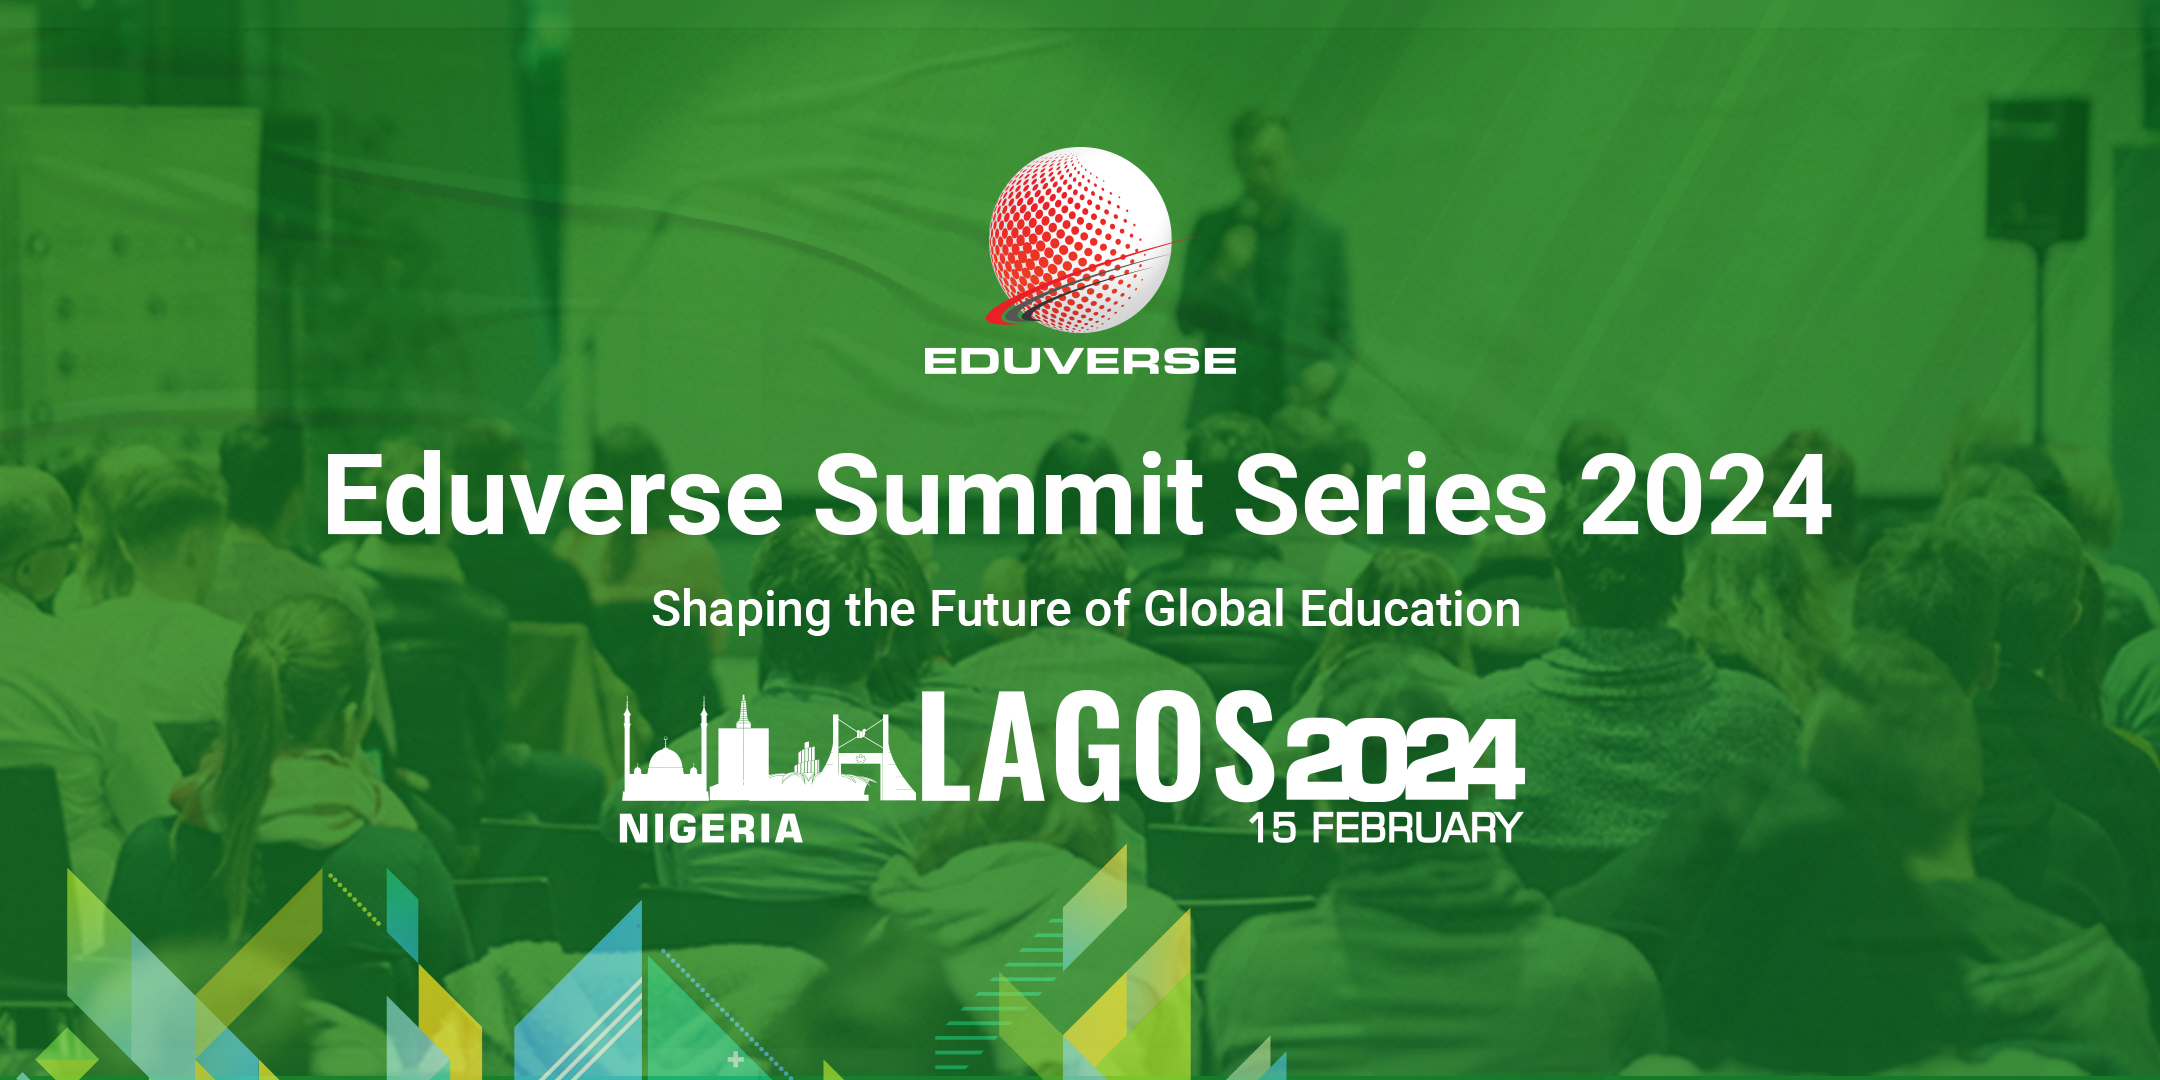 Eduverse Summit Series 2024 - Lagos, Nigeria